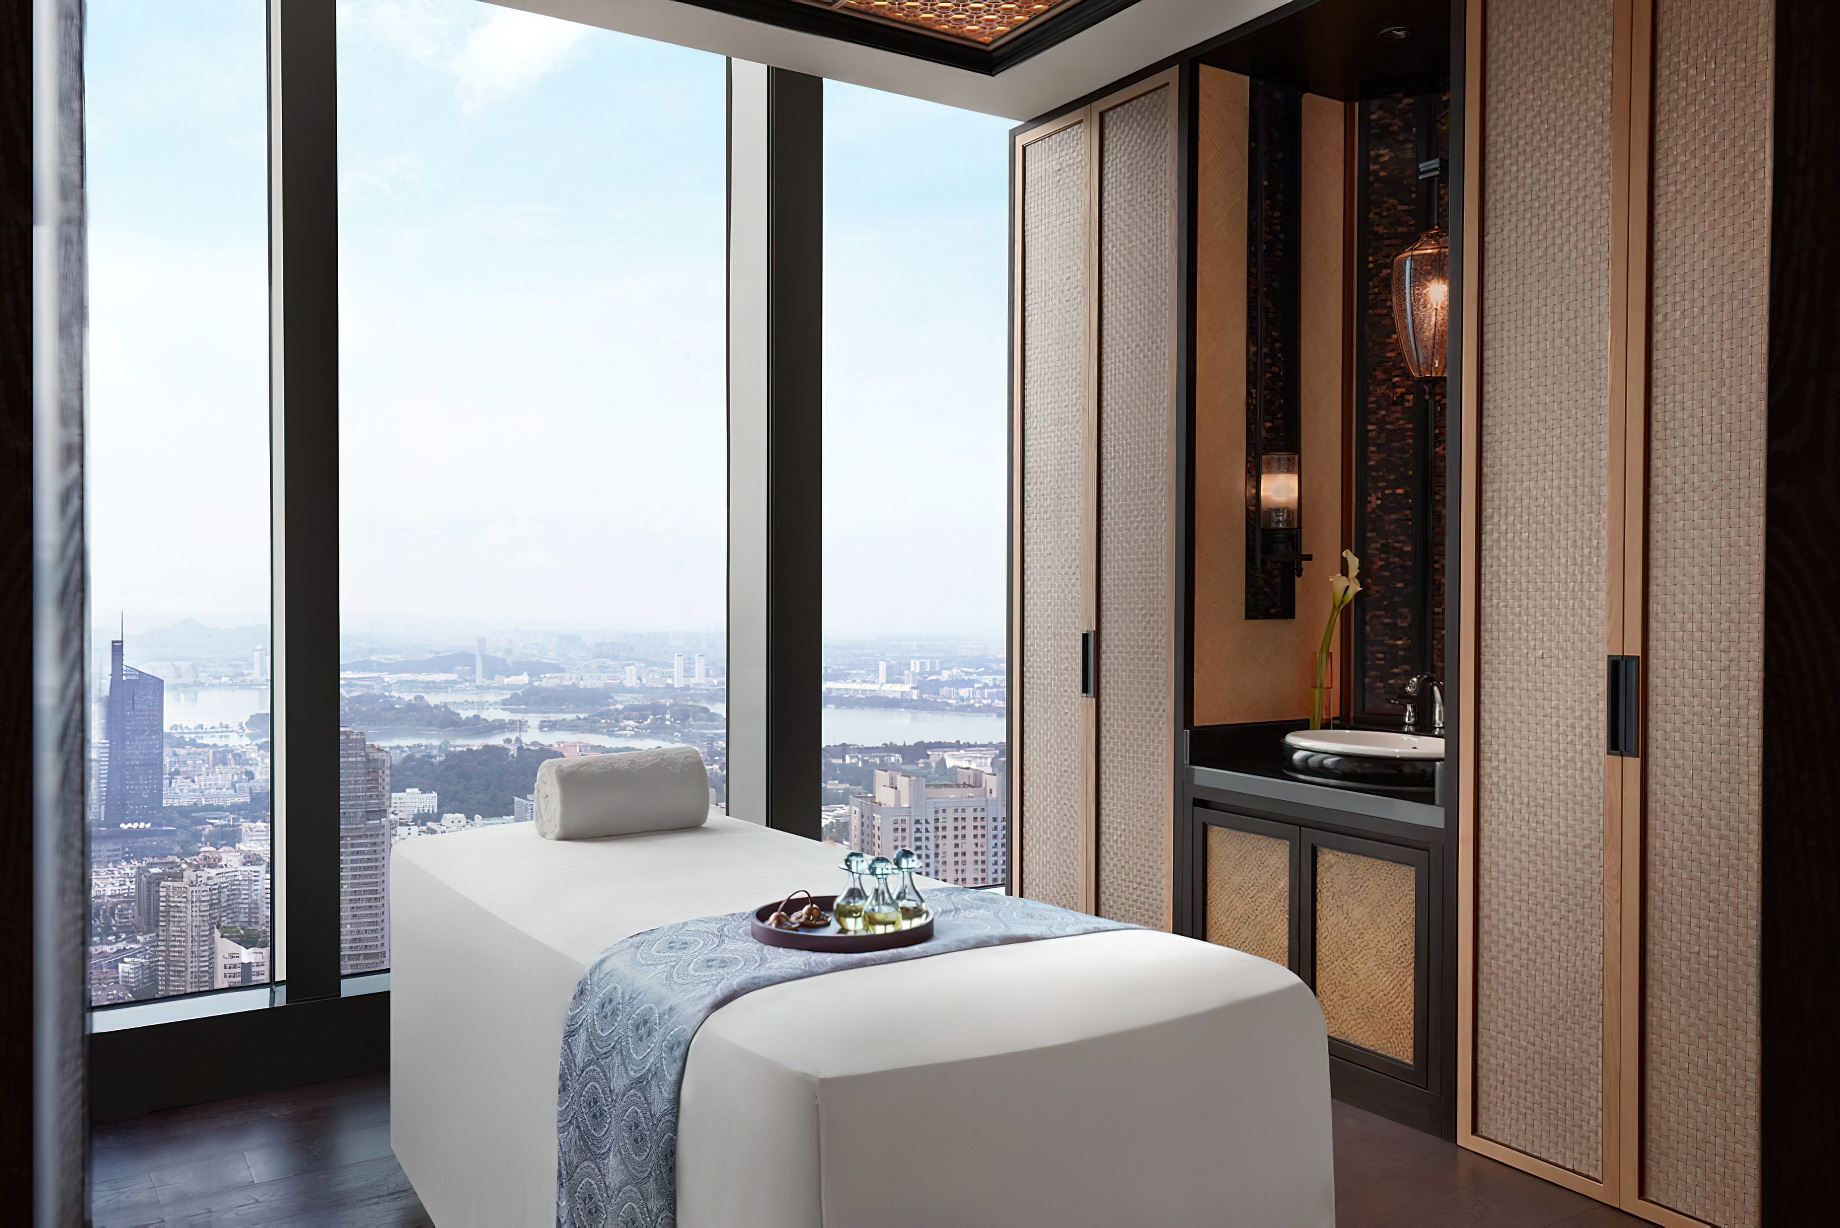 The Ritz-Carlton, Nanjing Hotel - Nanjing, China - Spa Treatment Table